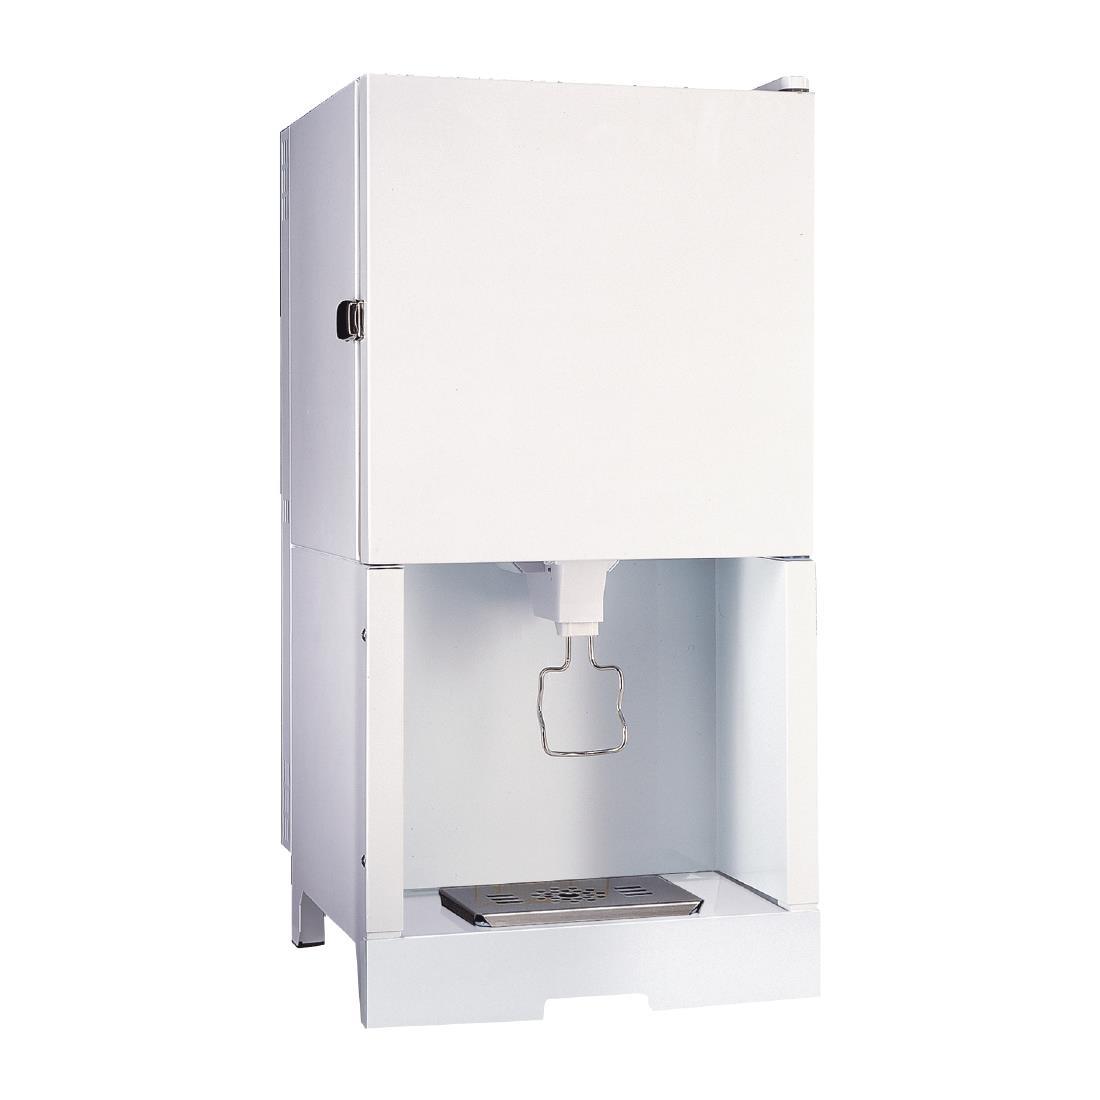 Autonumis Milk Cooler A102 - CC610  - 1